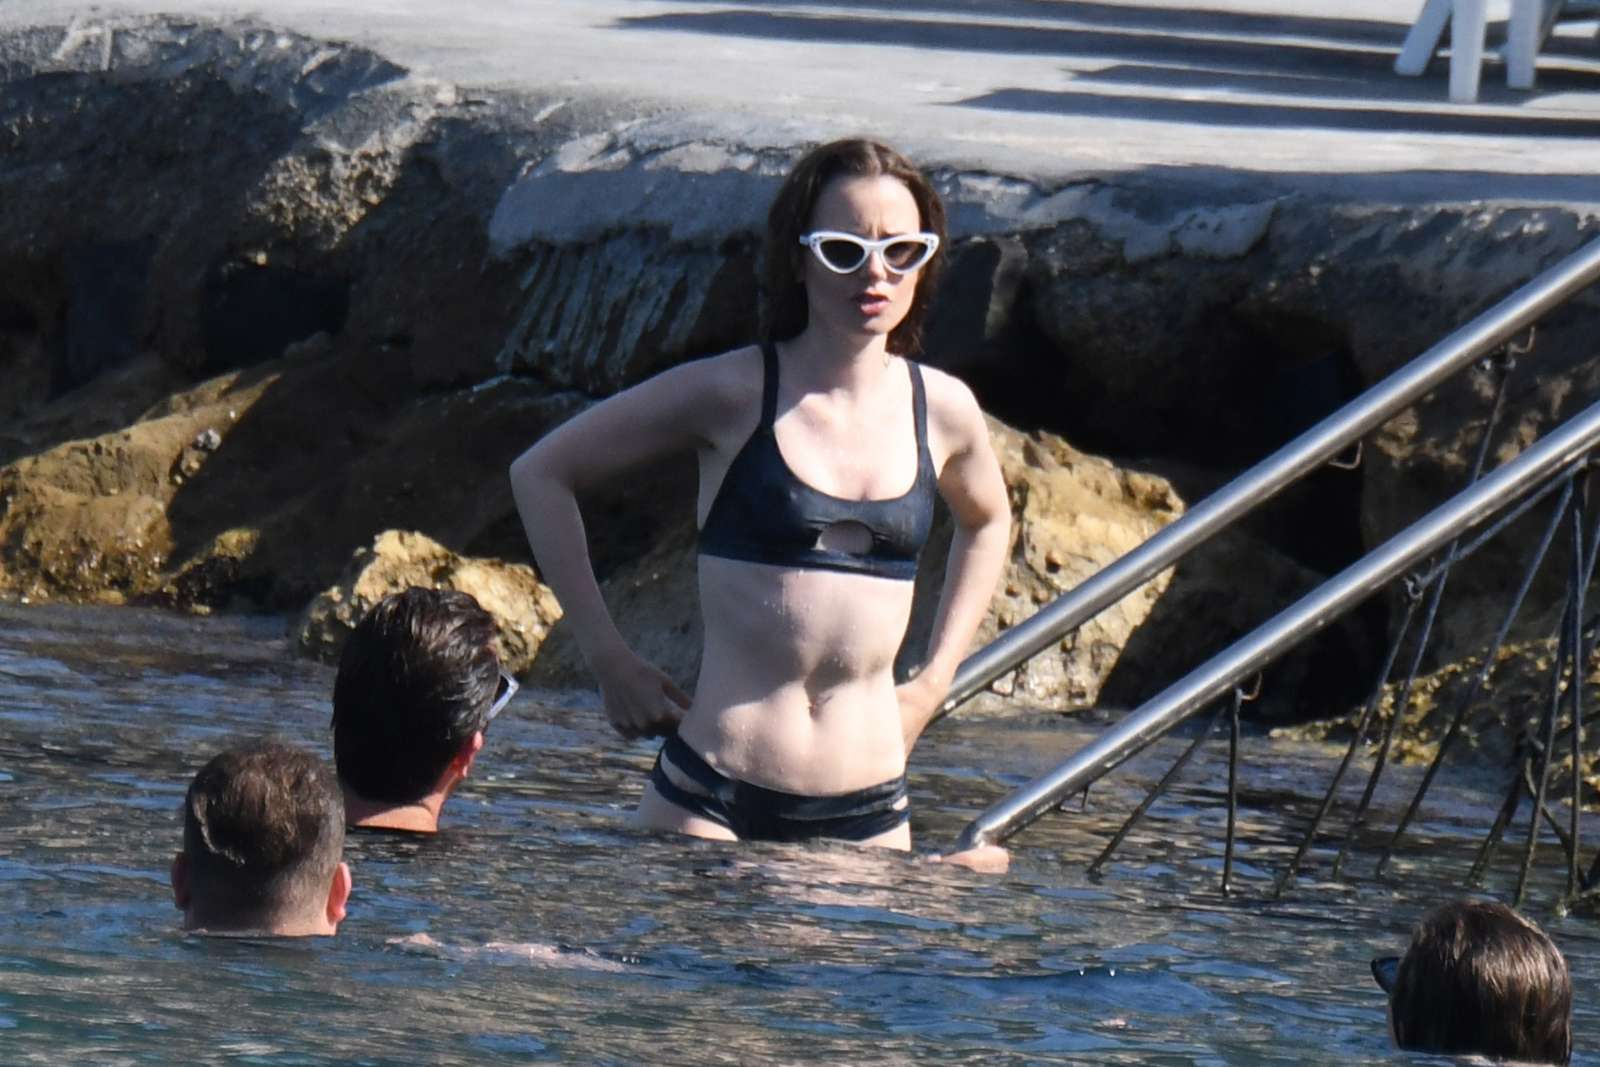 Lily Collins in Black Bikini at the beach in Ischia. 